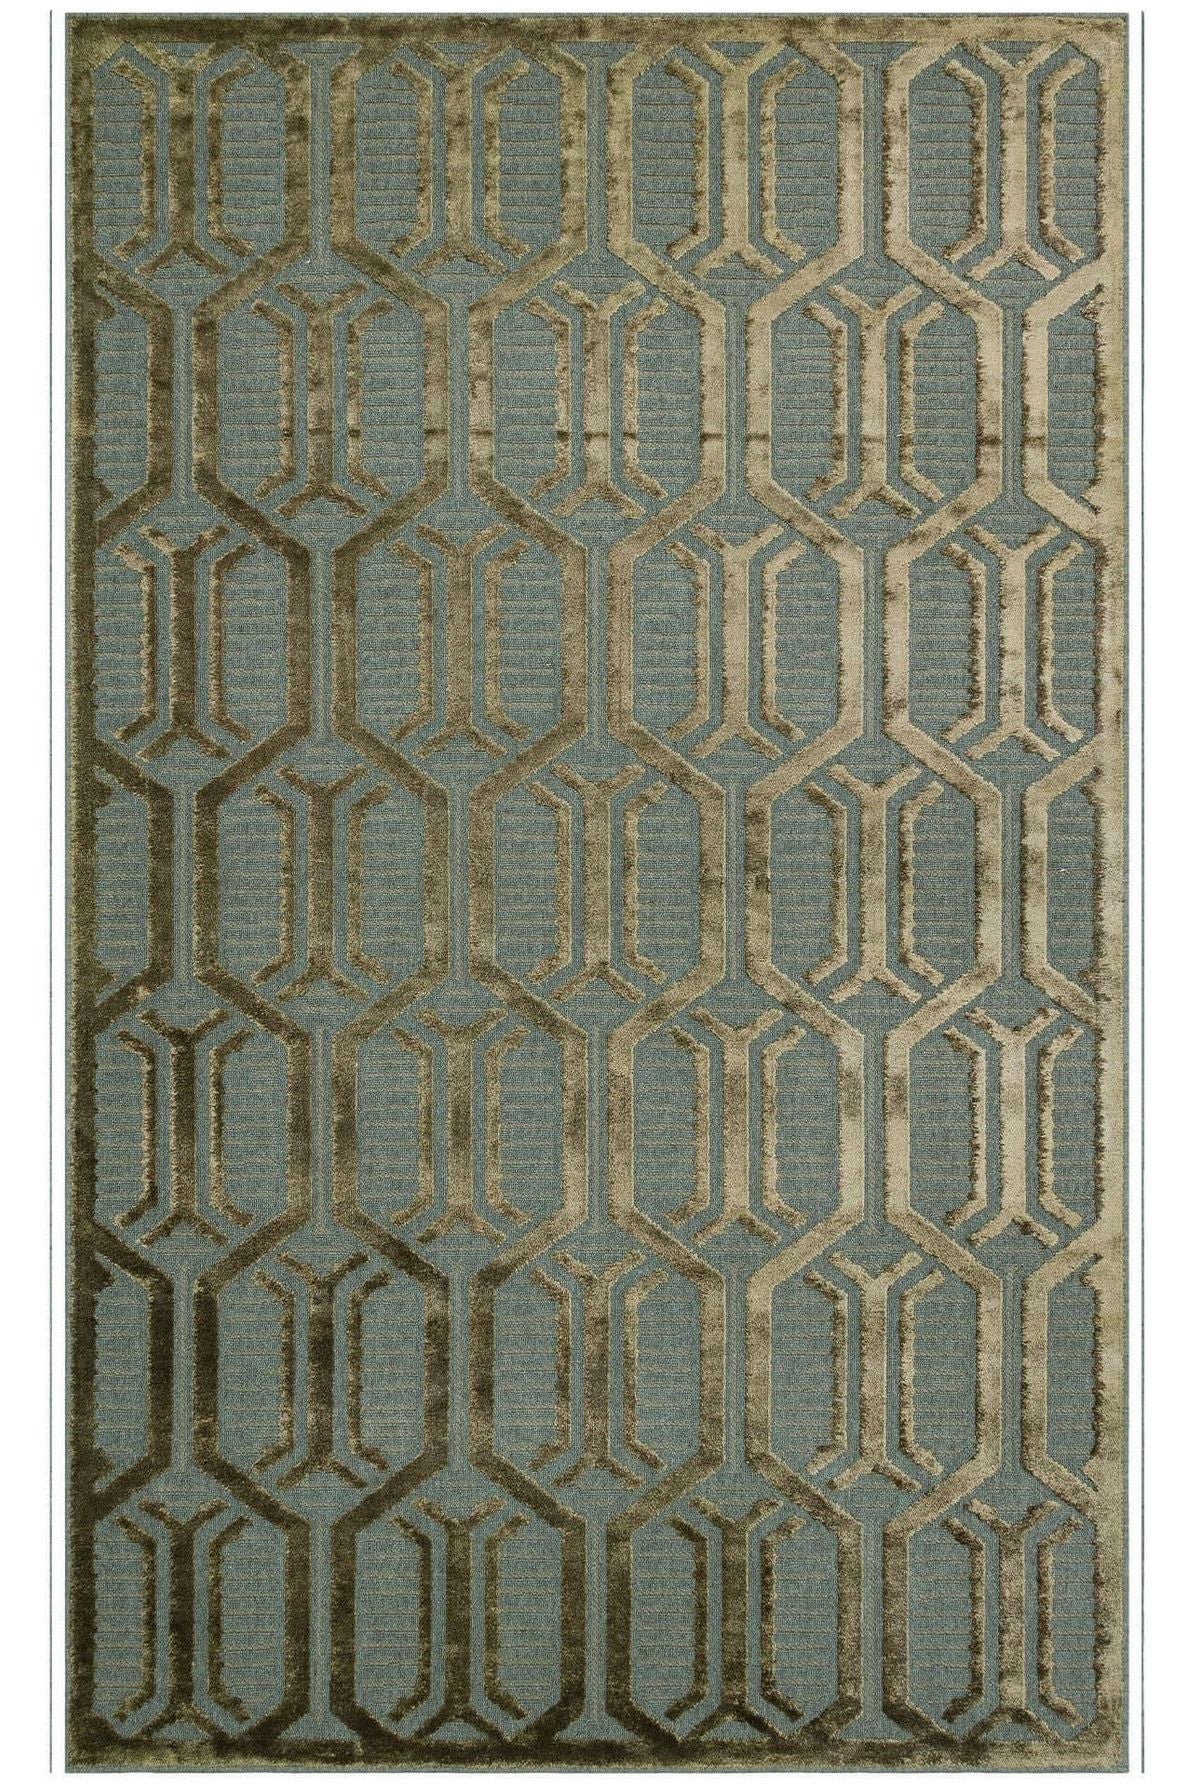 #Turkish_Carpets_Rugs# #Modern_Carpets# #Abrash_Carpets#Znt 07 Green Dyed